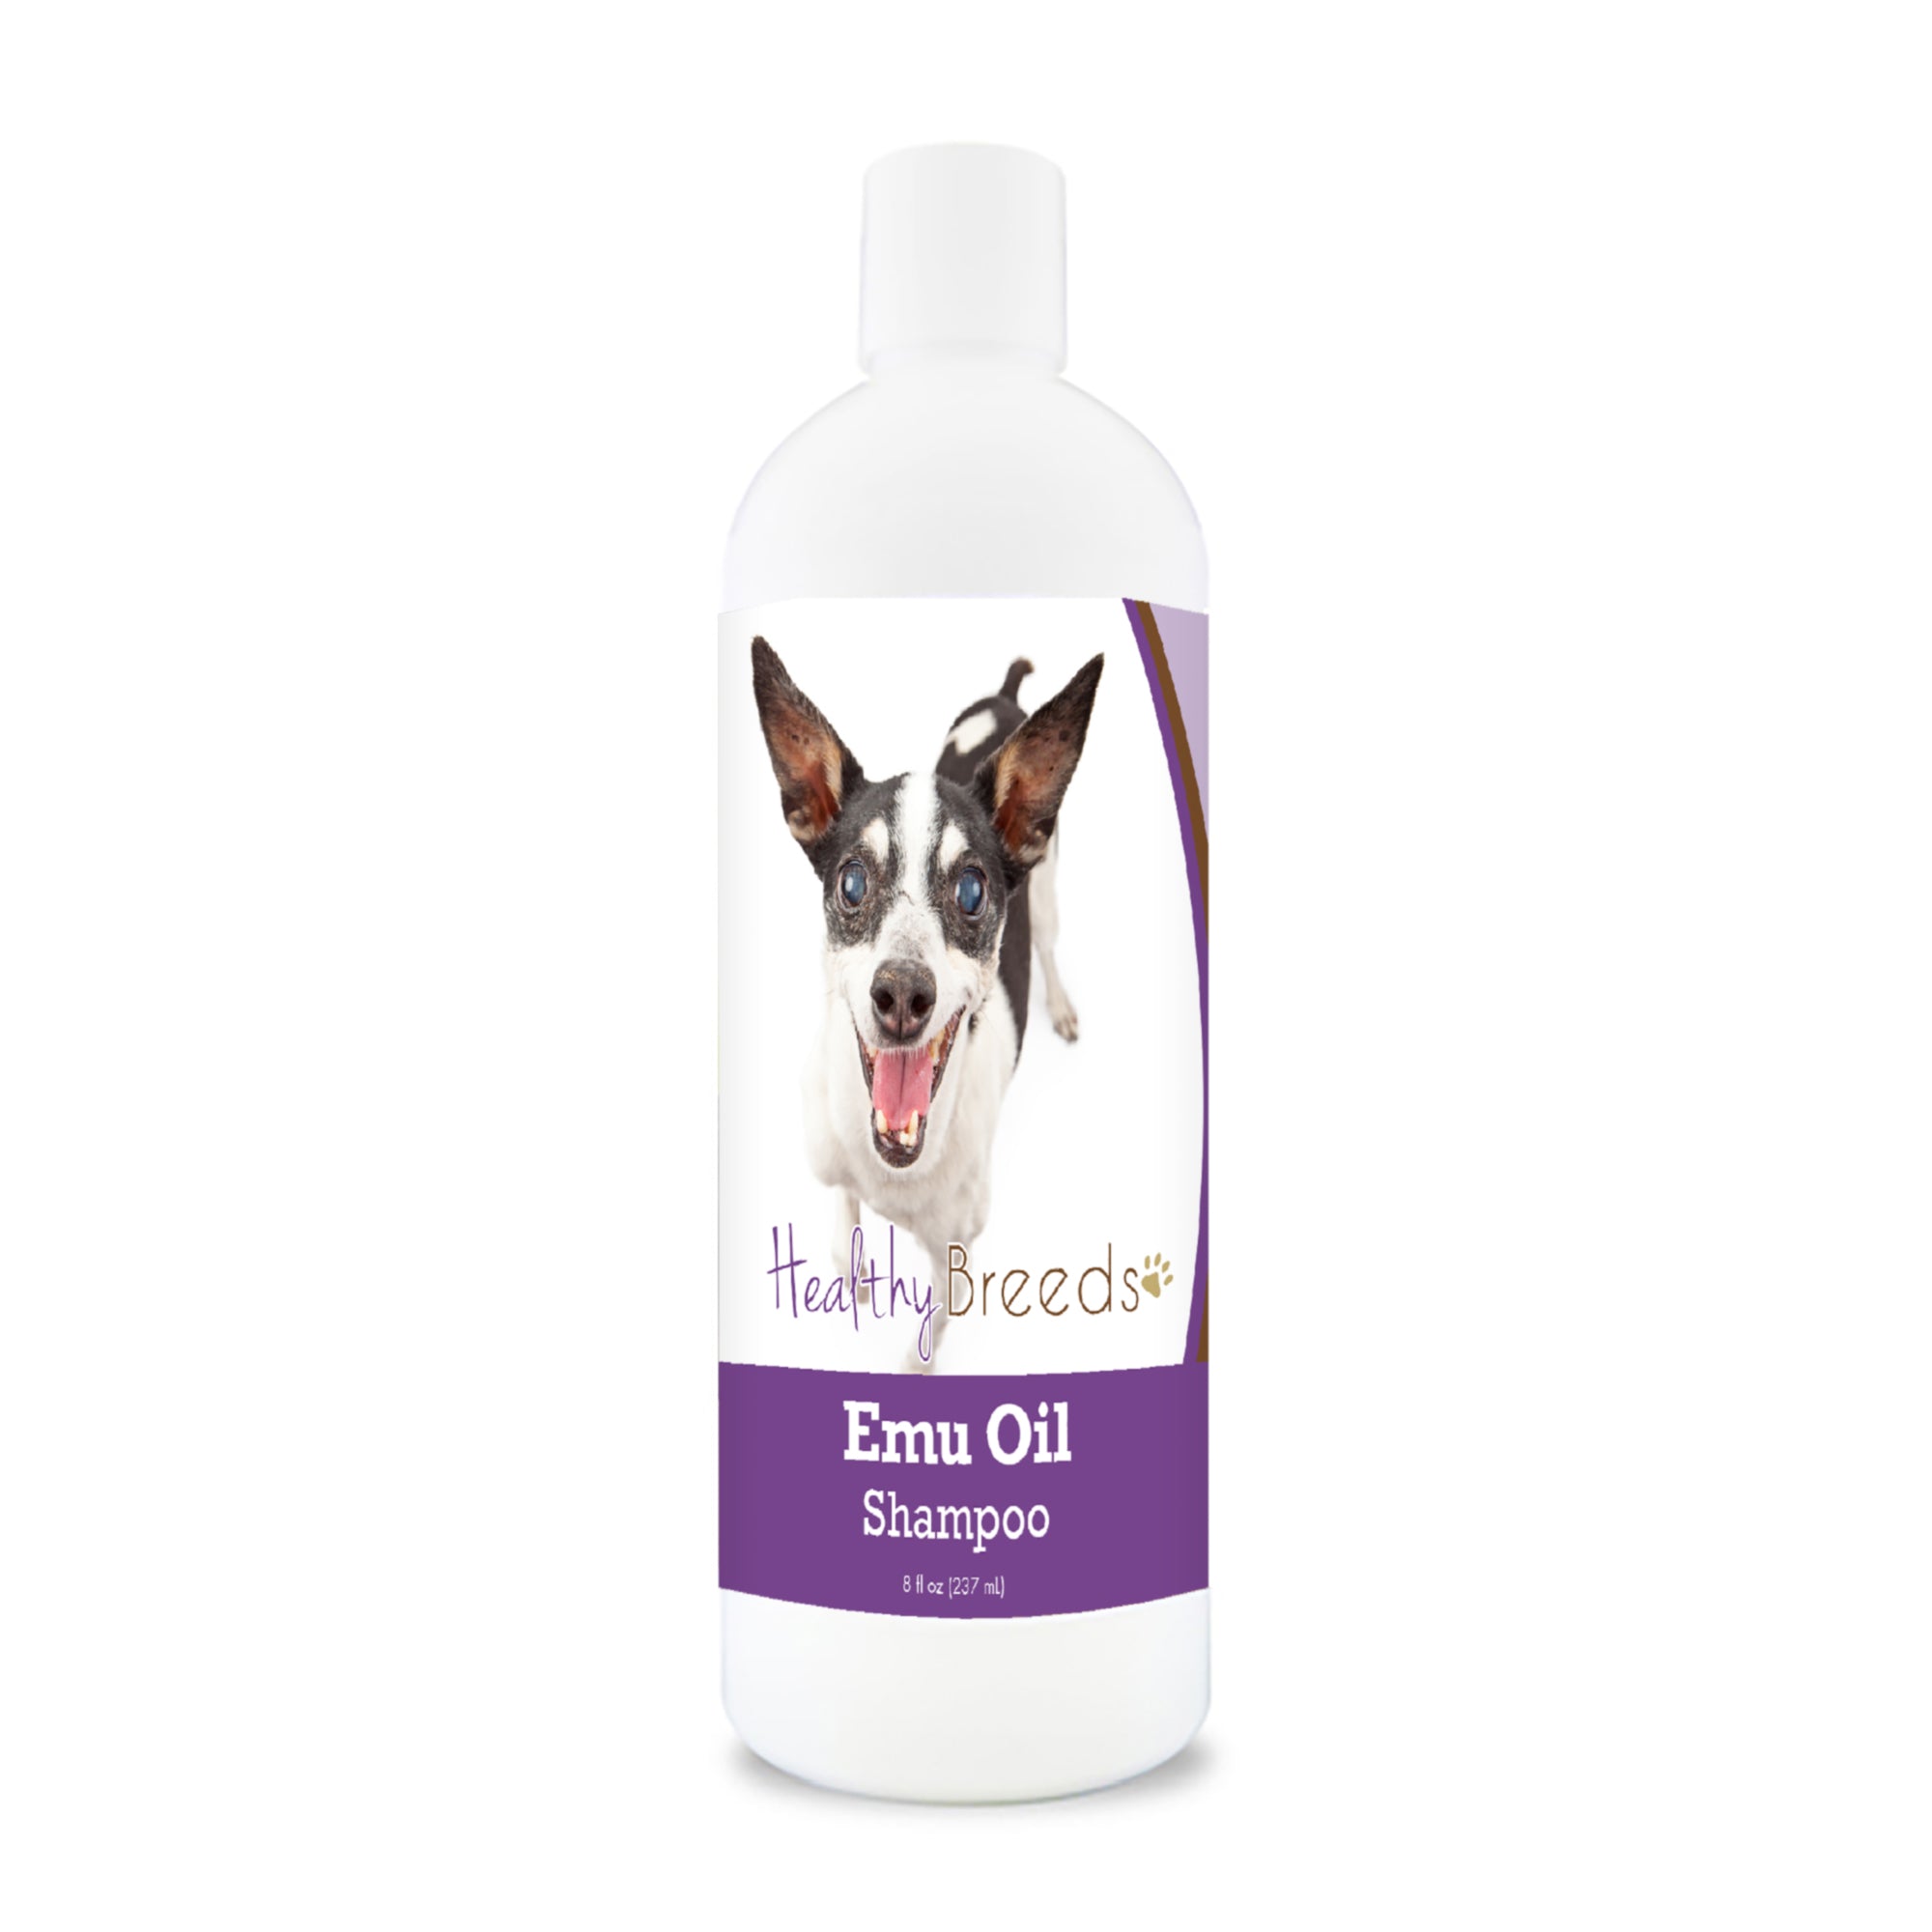 Rat Terrier Emu Oil Shampoo 8 oz